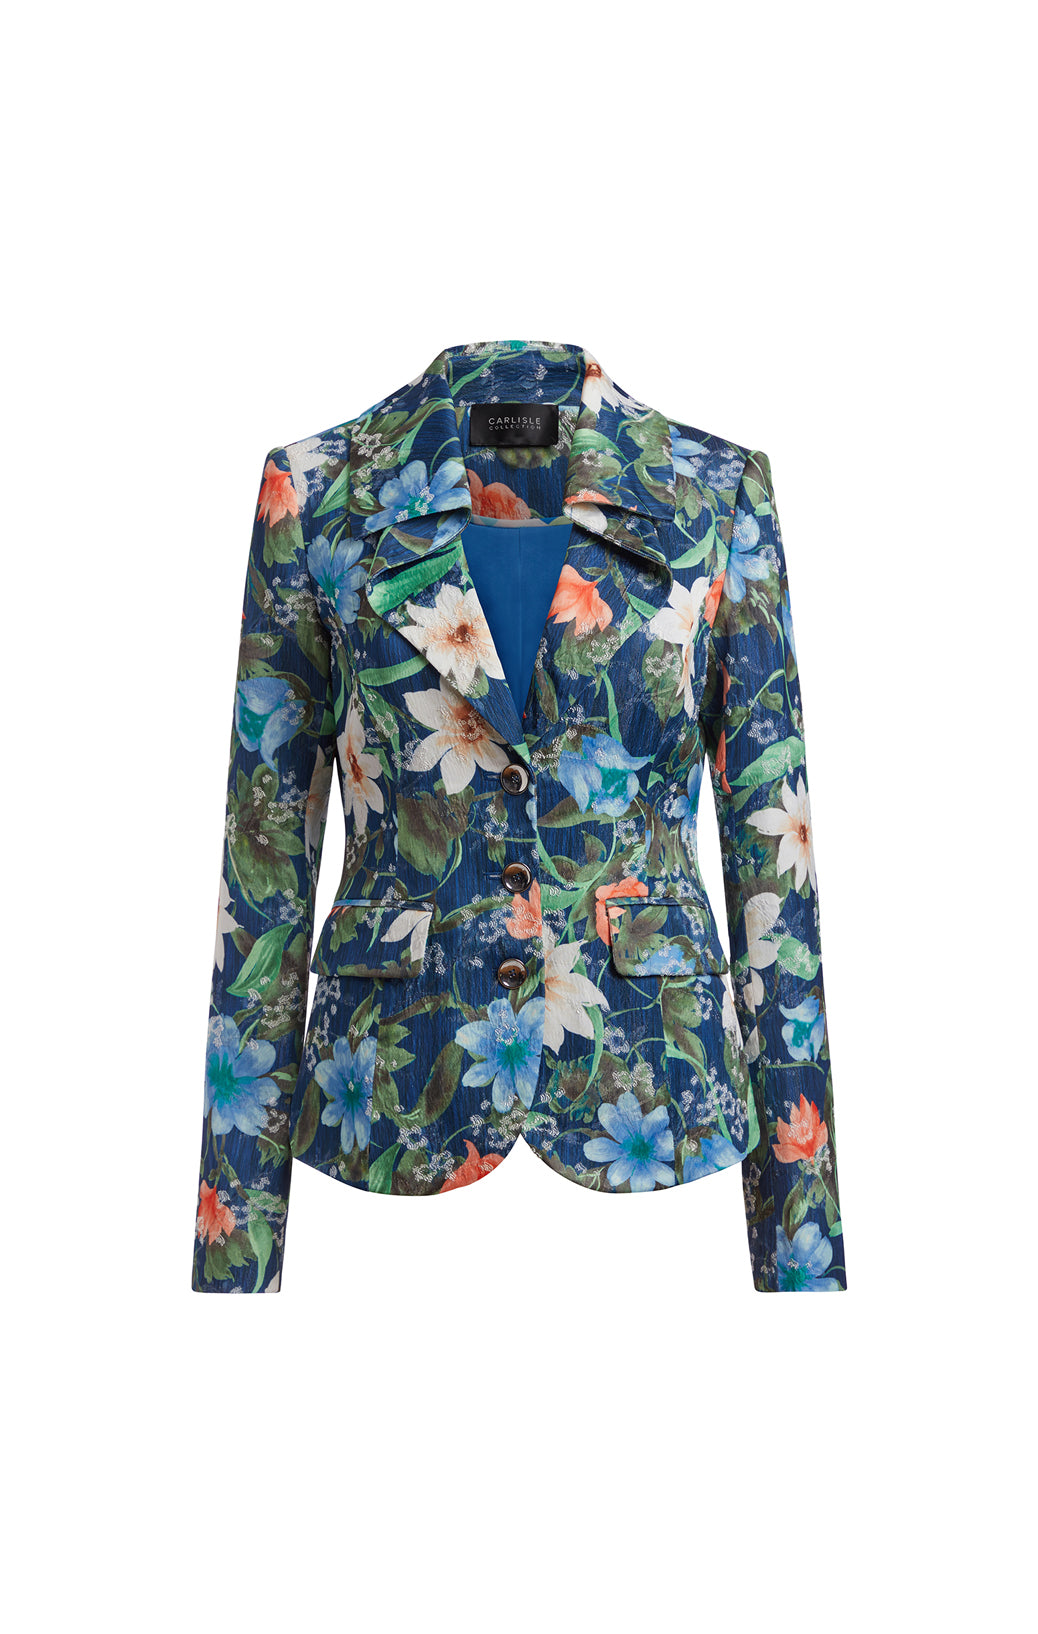 Tuileries - Overprinted Italian Floral-Jacquard Skirt - IMAGE